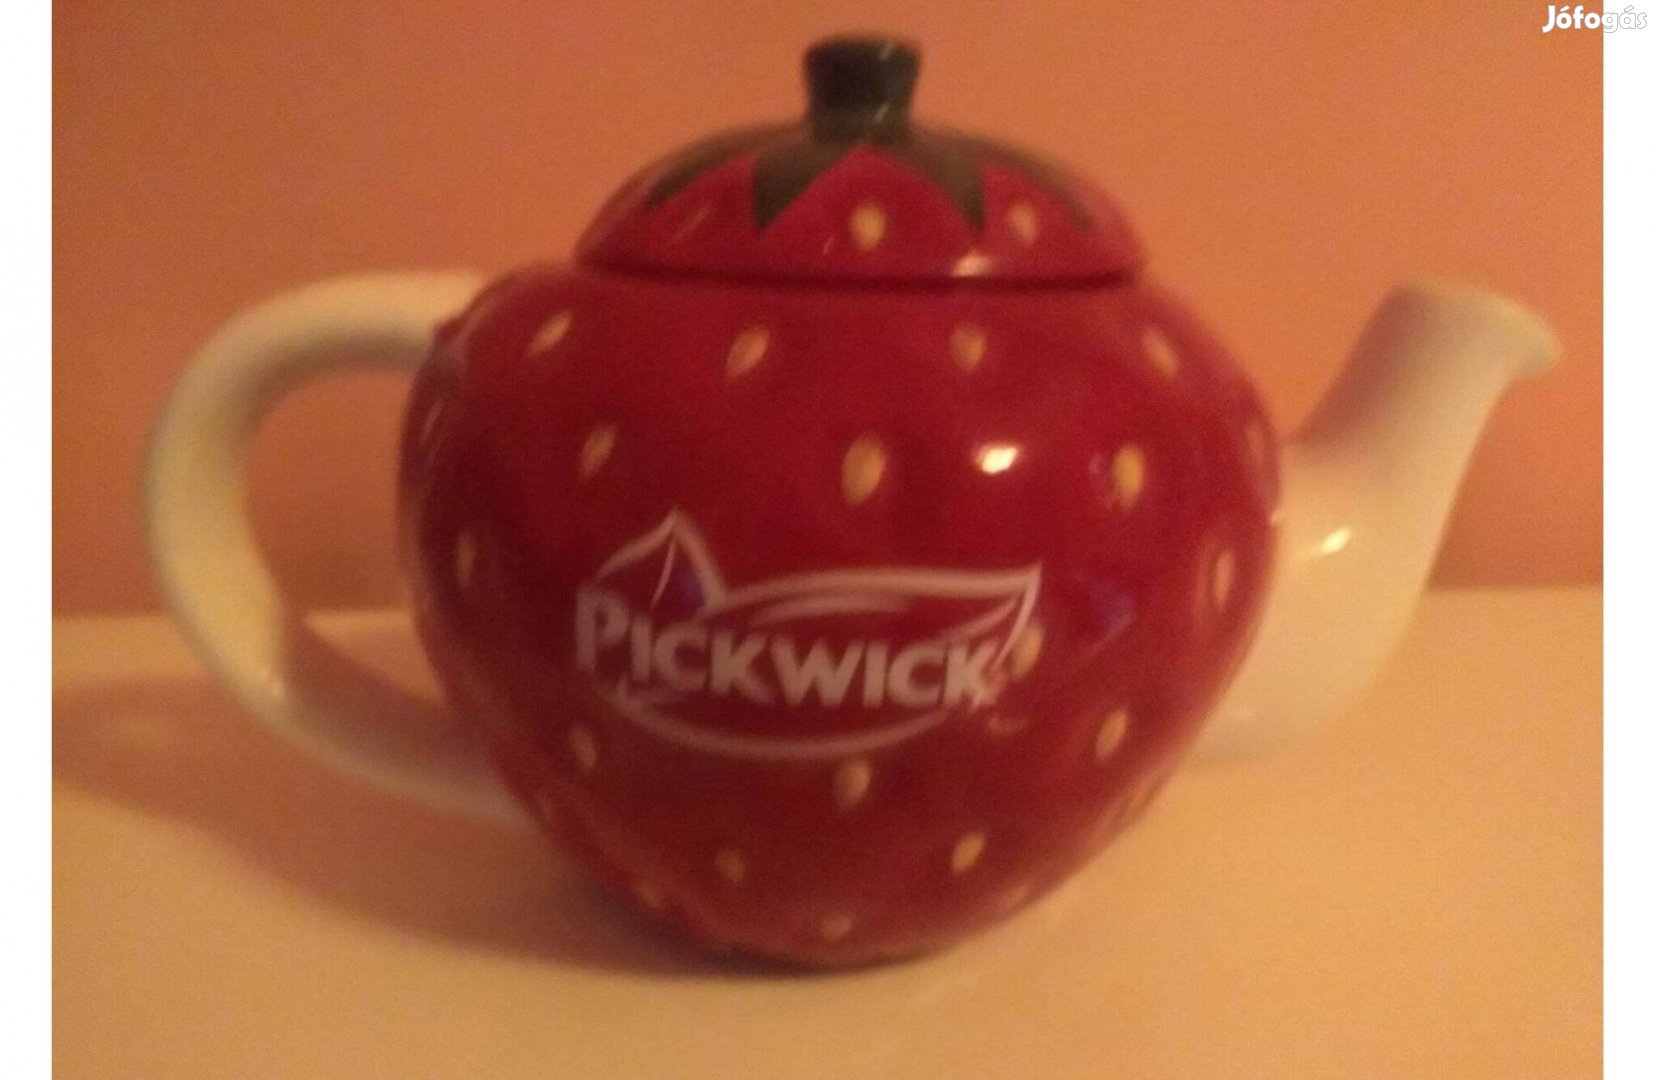 Pickwick teáskanna